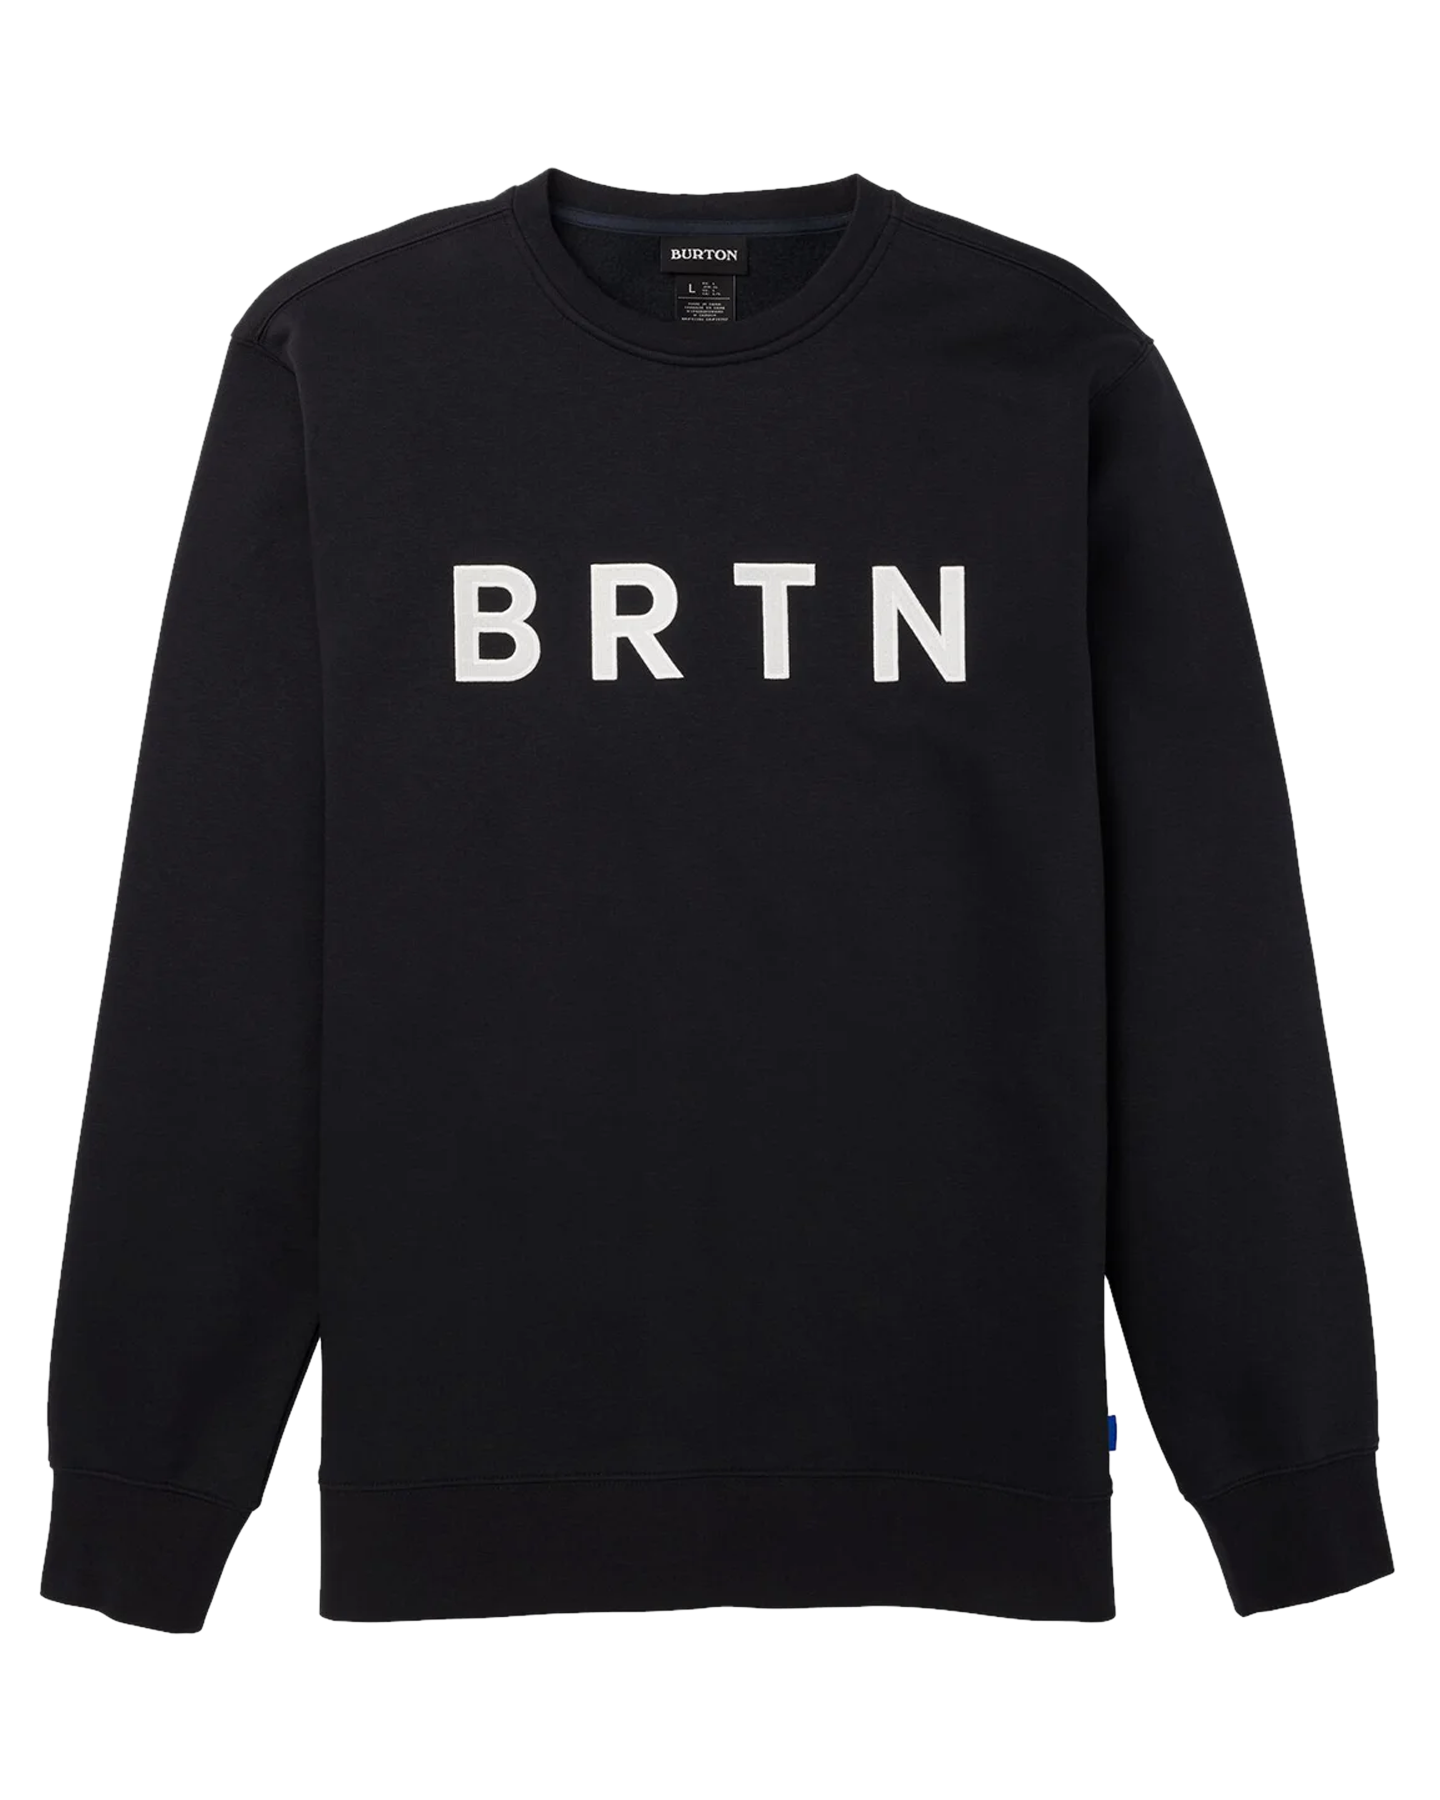 Burton BRTN Crew Sweatshirt - True Black - 2021 Hoodies/Pullovers - Mens - SnowSkiersWarehouse